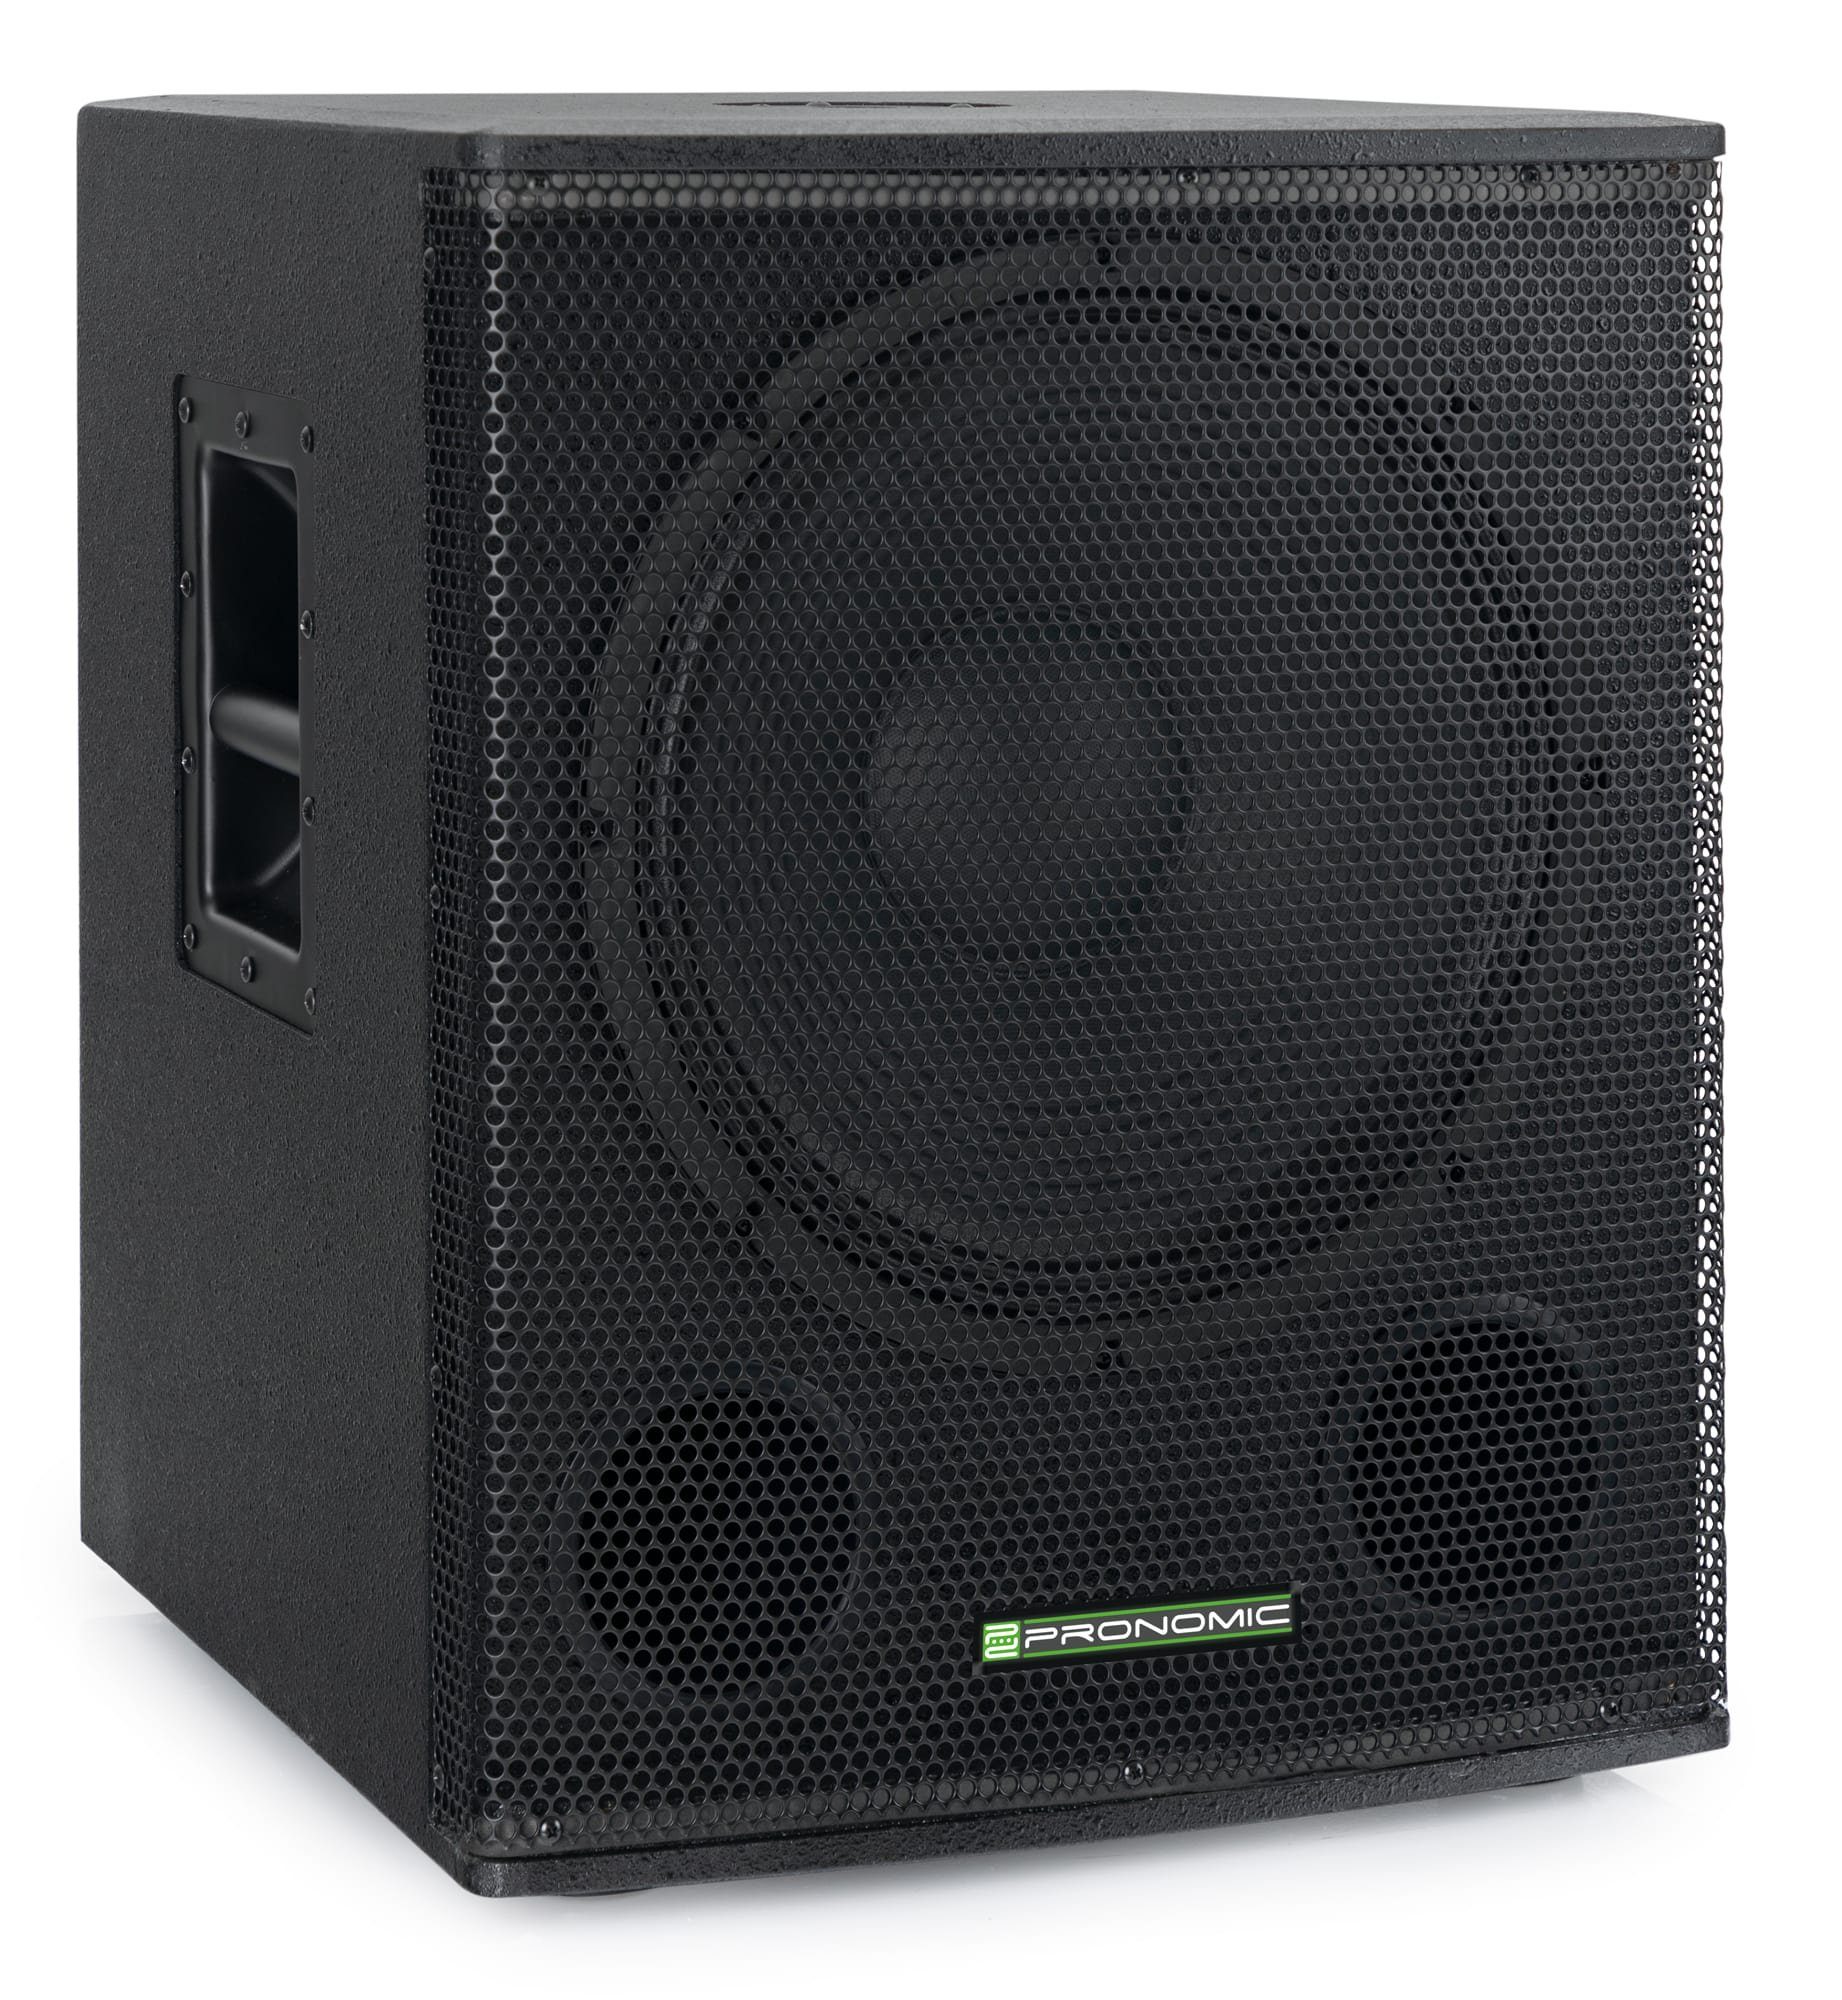 Pronomic SA-18 SUB Aktiv Сабуфери - 1x 18" Speaker mit Bassreflex-Öffnungen Сабуфери (350 W, max. SPL: 128 dB - 35mm-Flansch)